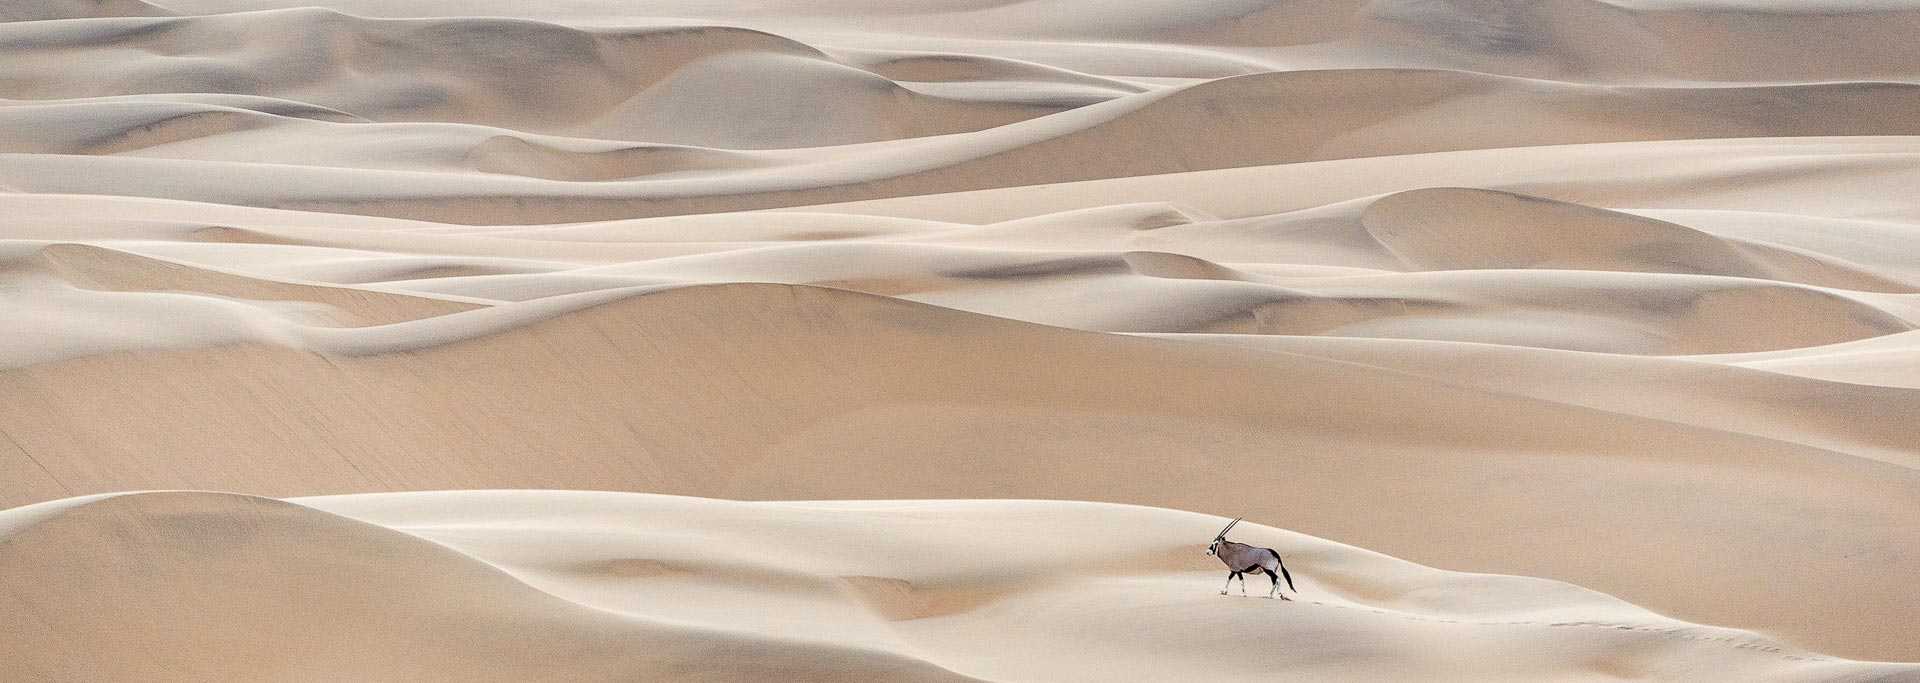 Oryx walking across sand dunes in Namibia